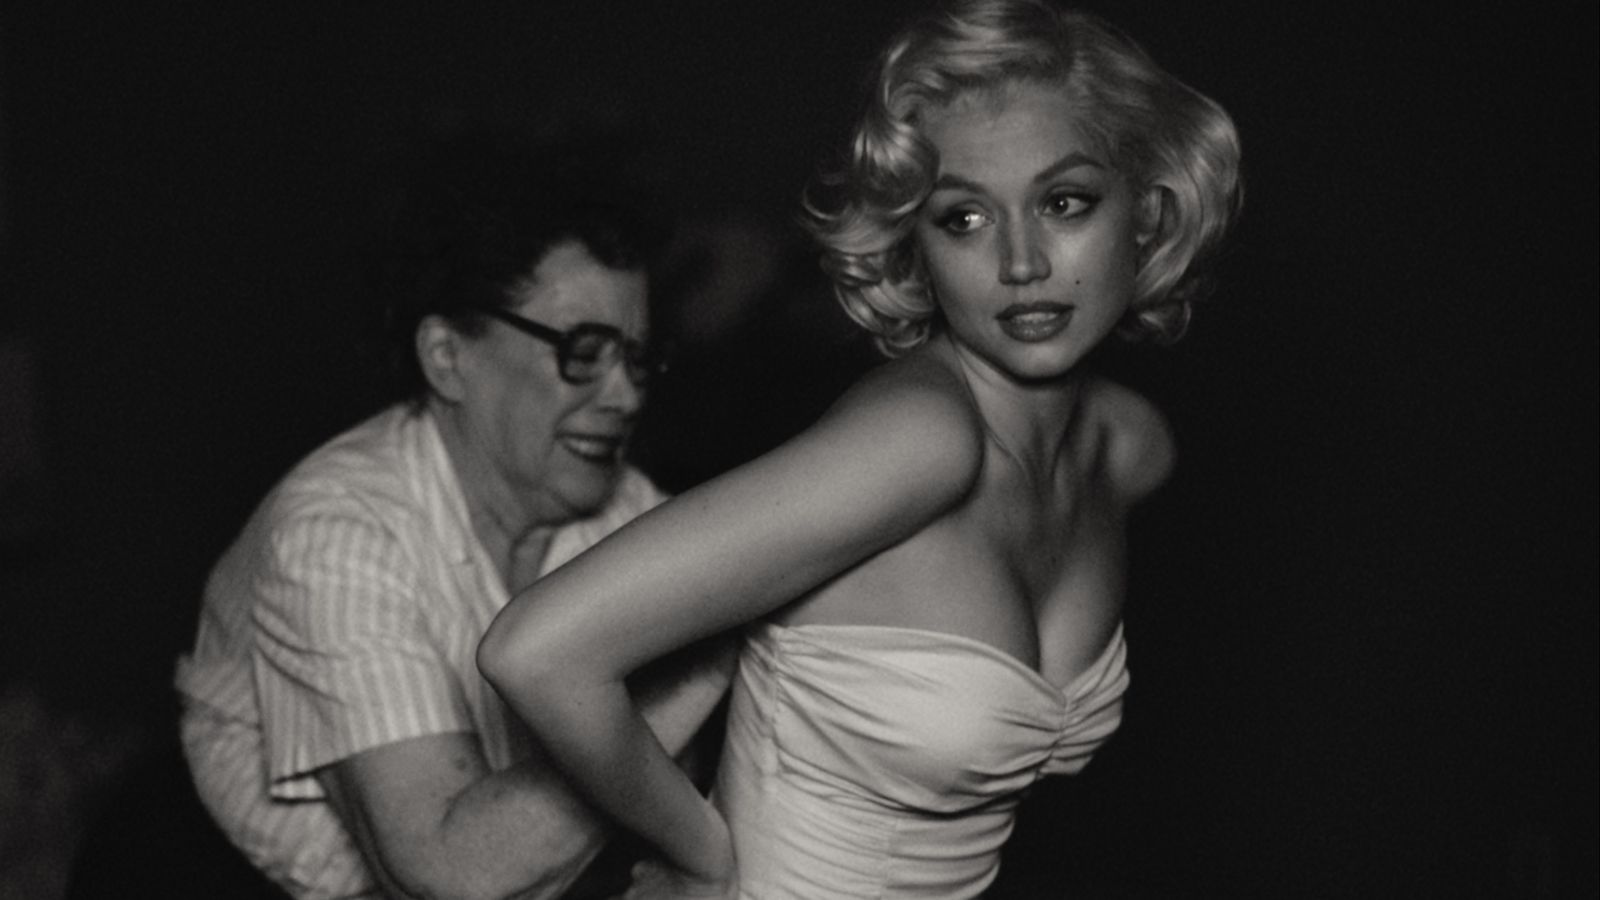 Ana de Armas Is Marilyn Monroe in Trailer for Director Andrew